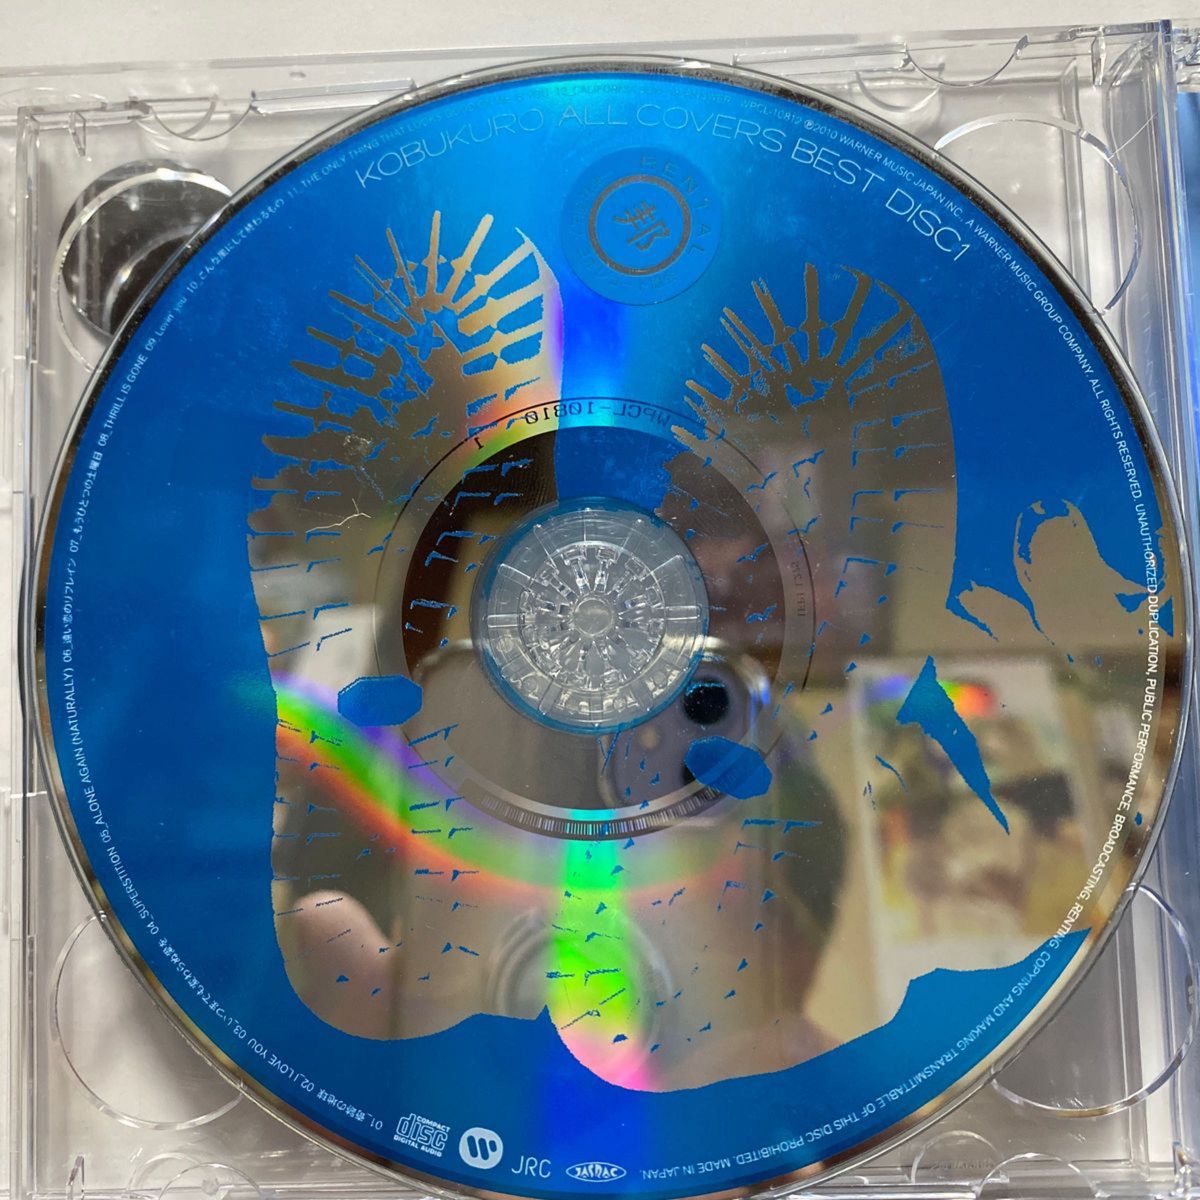 KOBUKURO ALL COVERS BEST (完全生産限定盤)コブクロ　全25曲　CD2枚組　レンタル専用中古品　　　　①